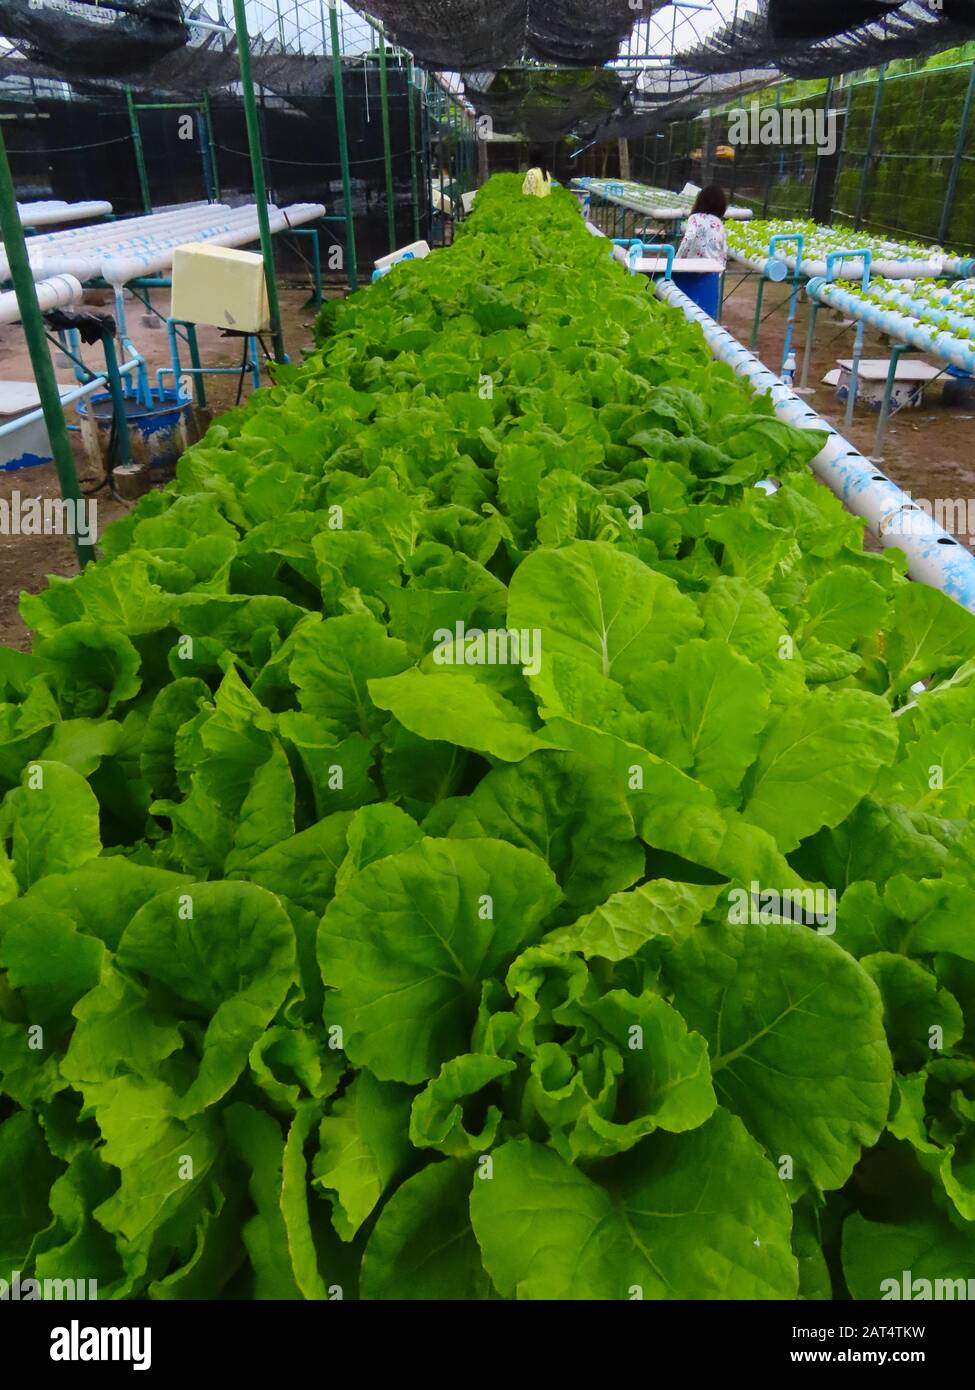 Organic farming of Lettuce Stock Photo